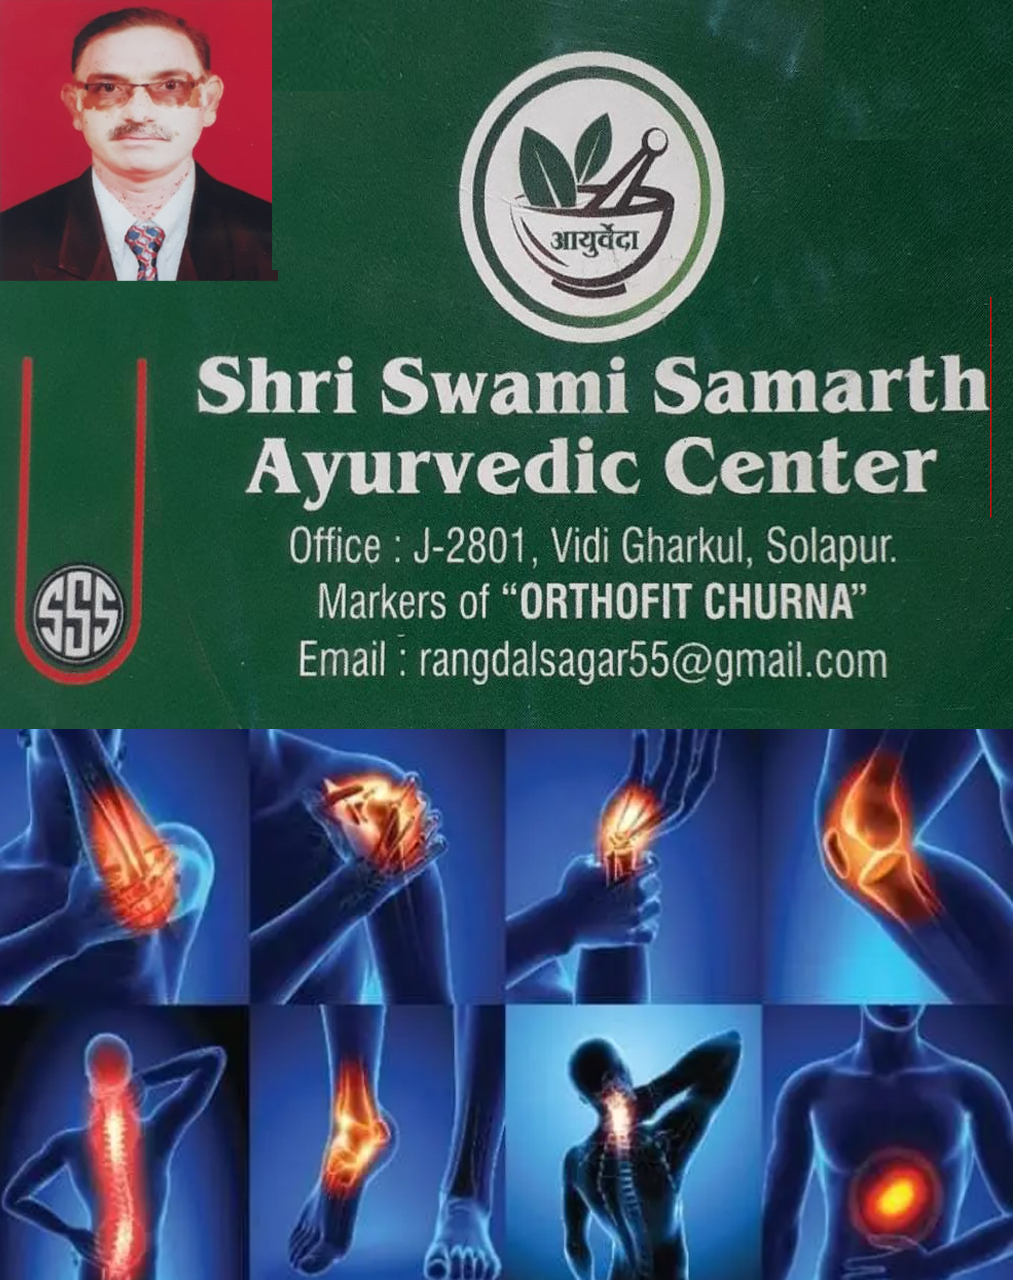 Shri Swami Samarth Ayurvedic Center | SolapurMall.com